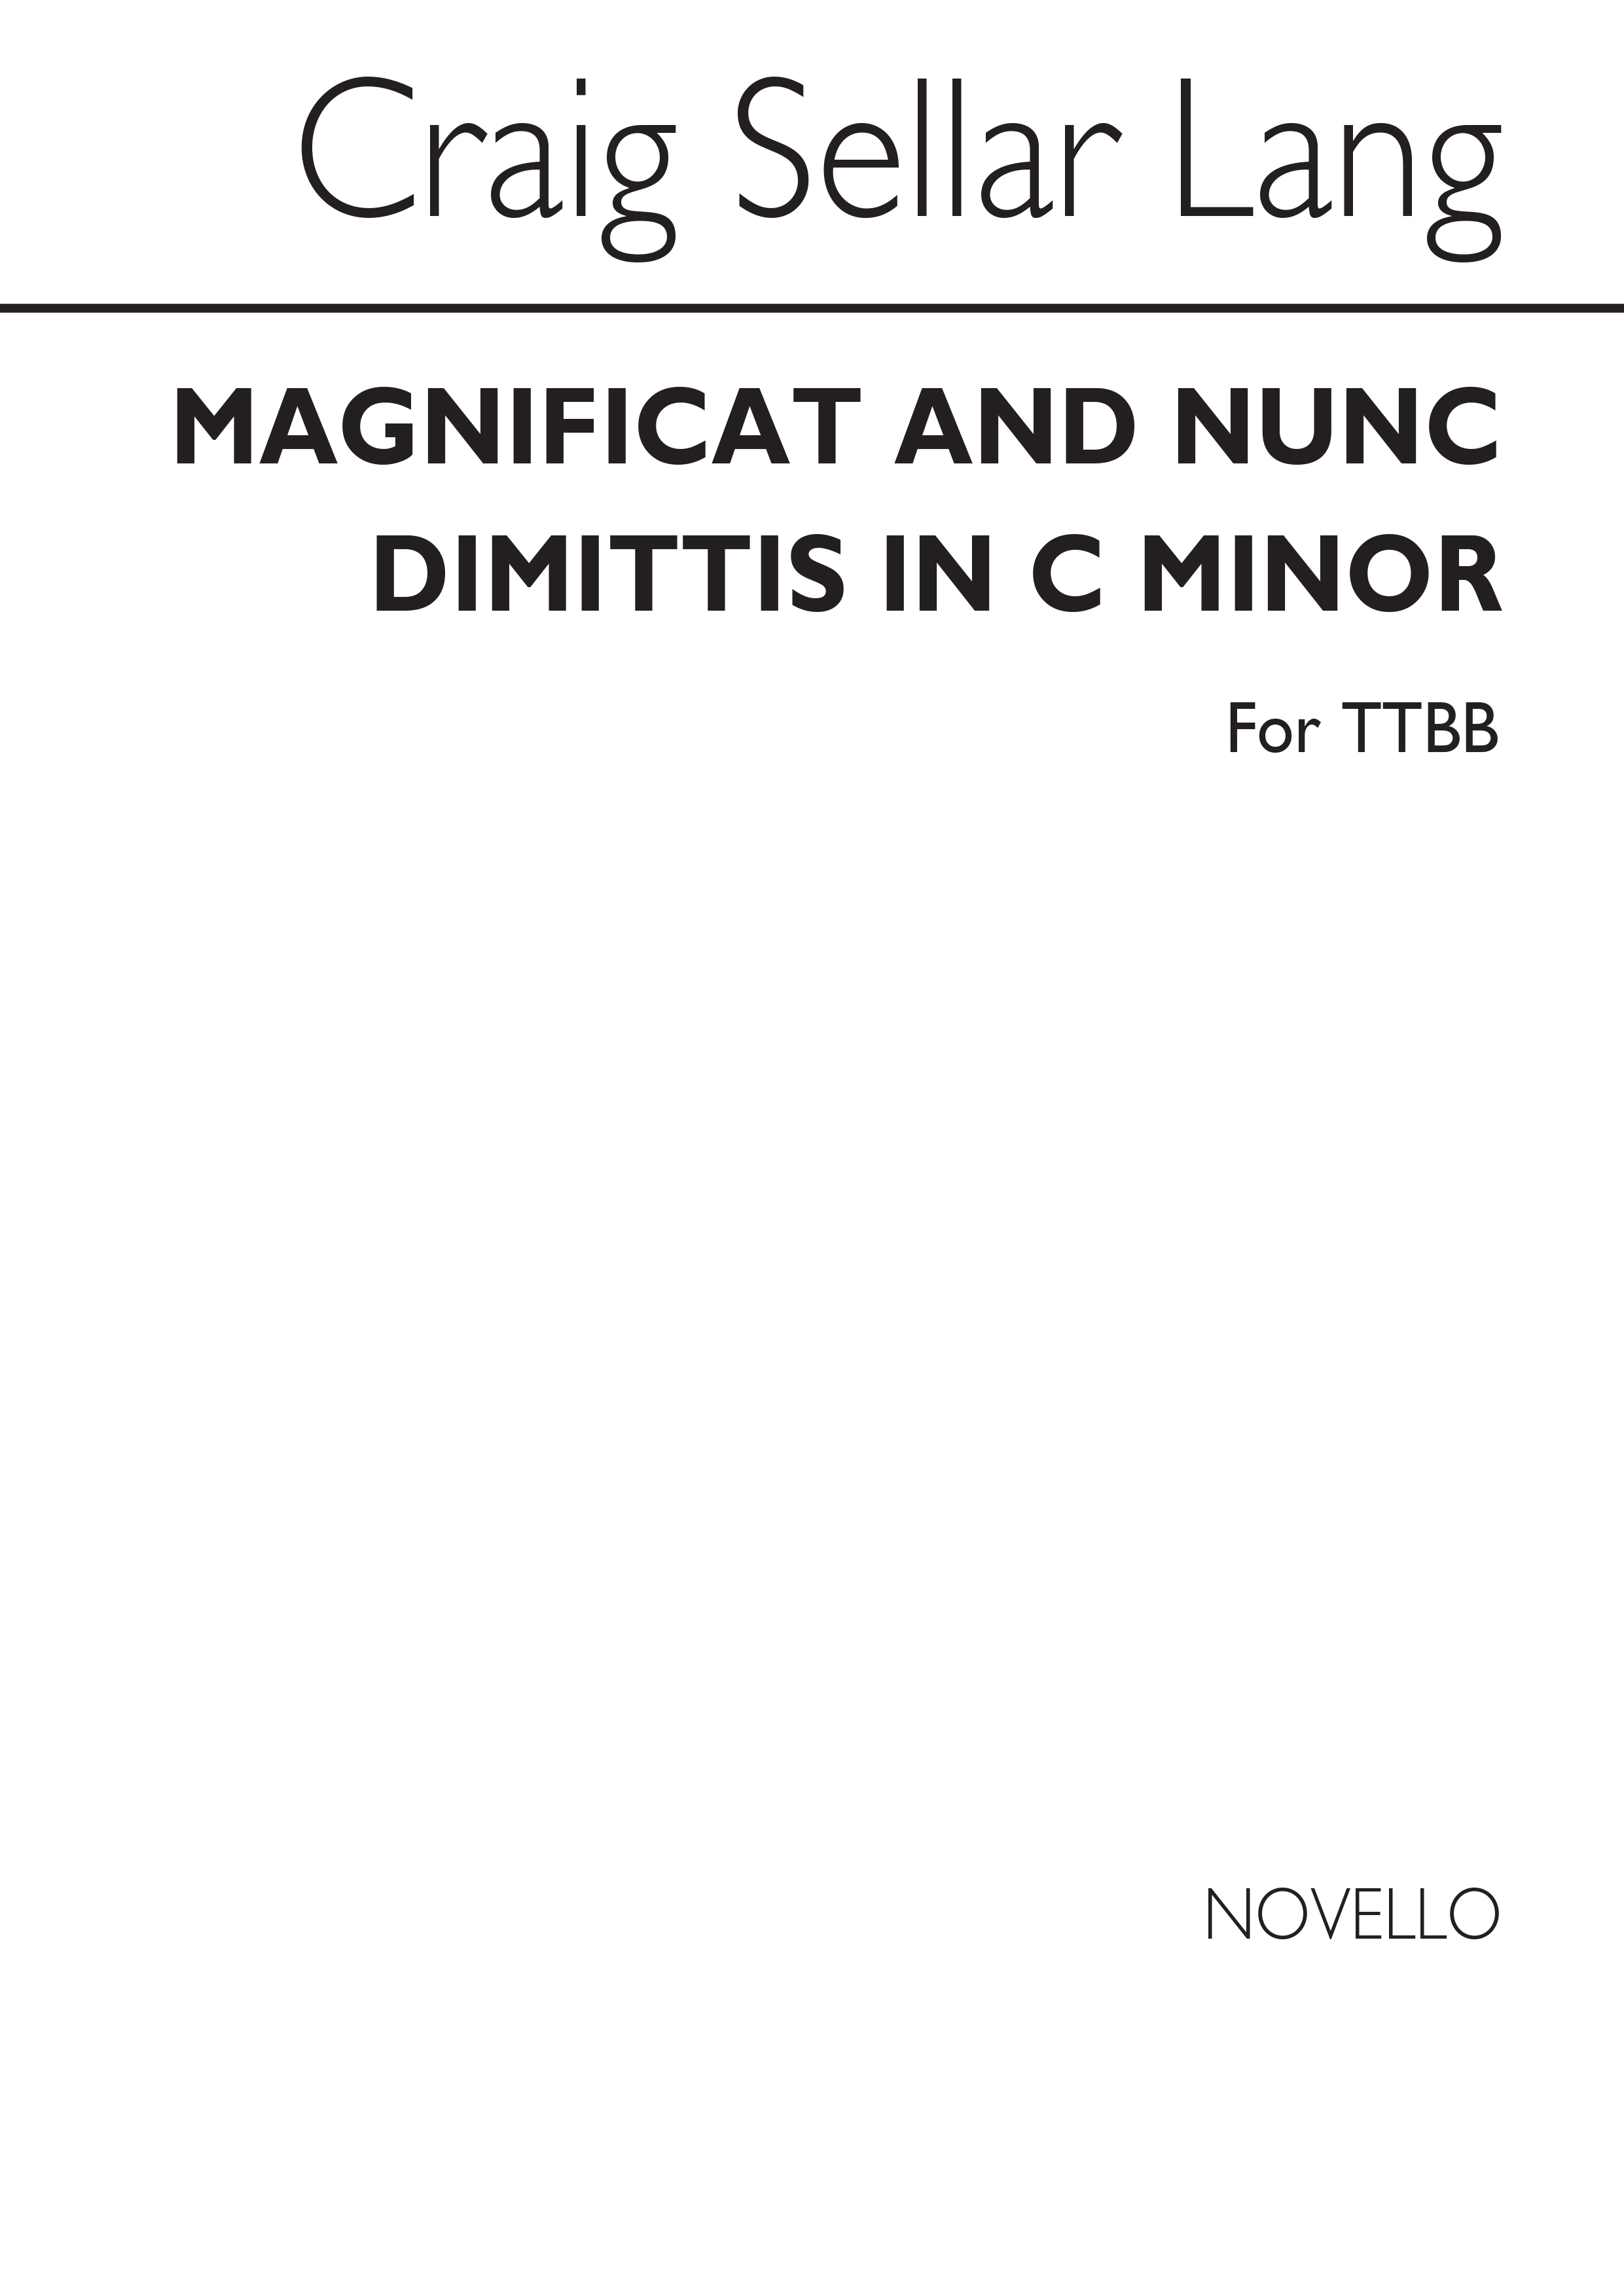 C.S. Lang: Magnificat And Nunc Dimittis for TTBB Chorus